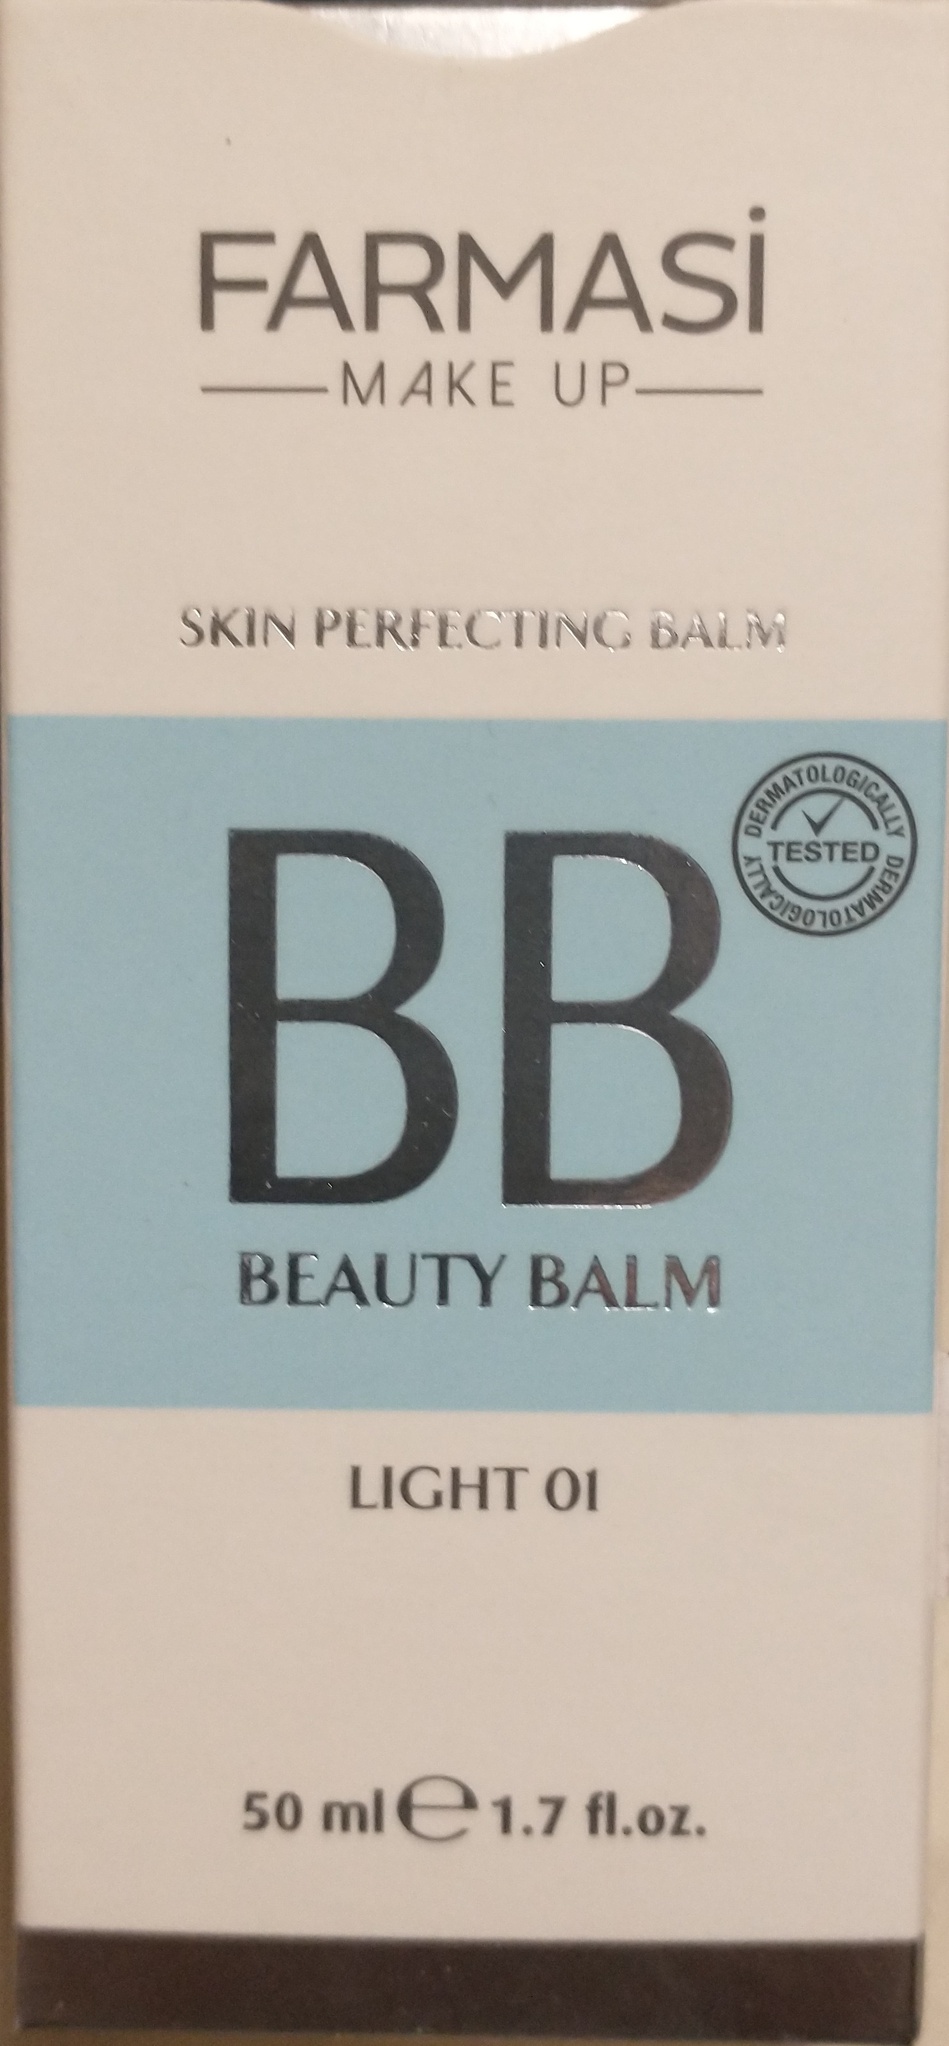 Farmasi BB Beauty Balm